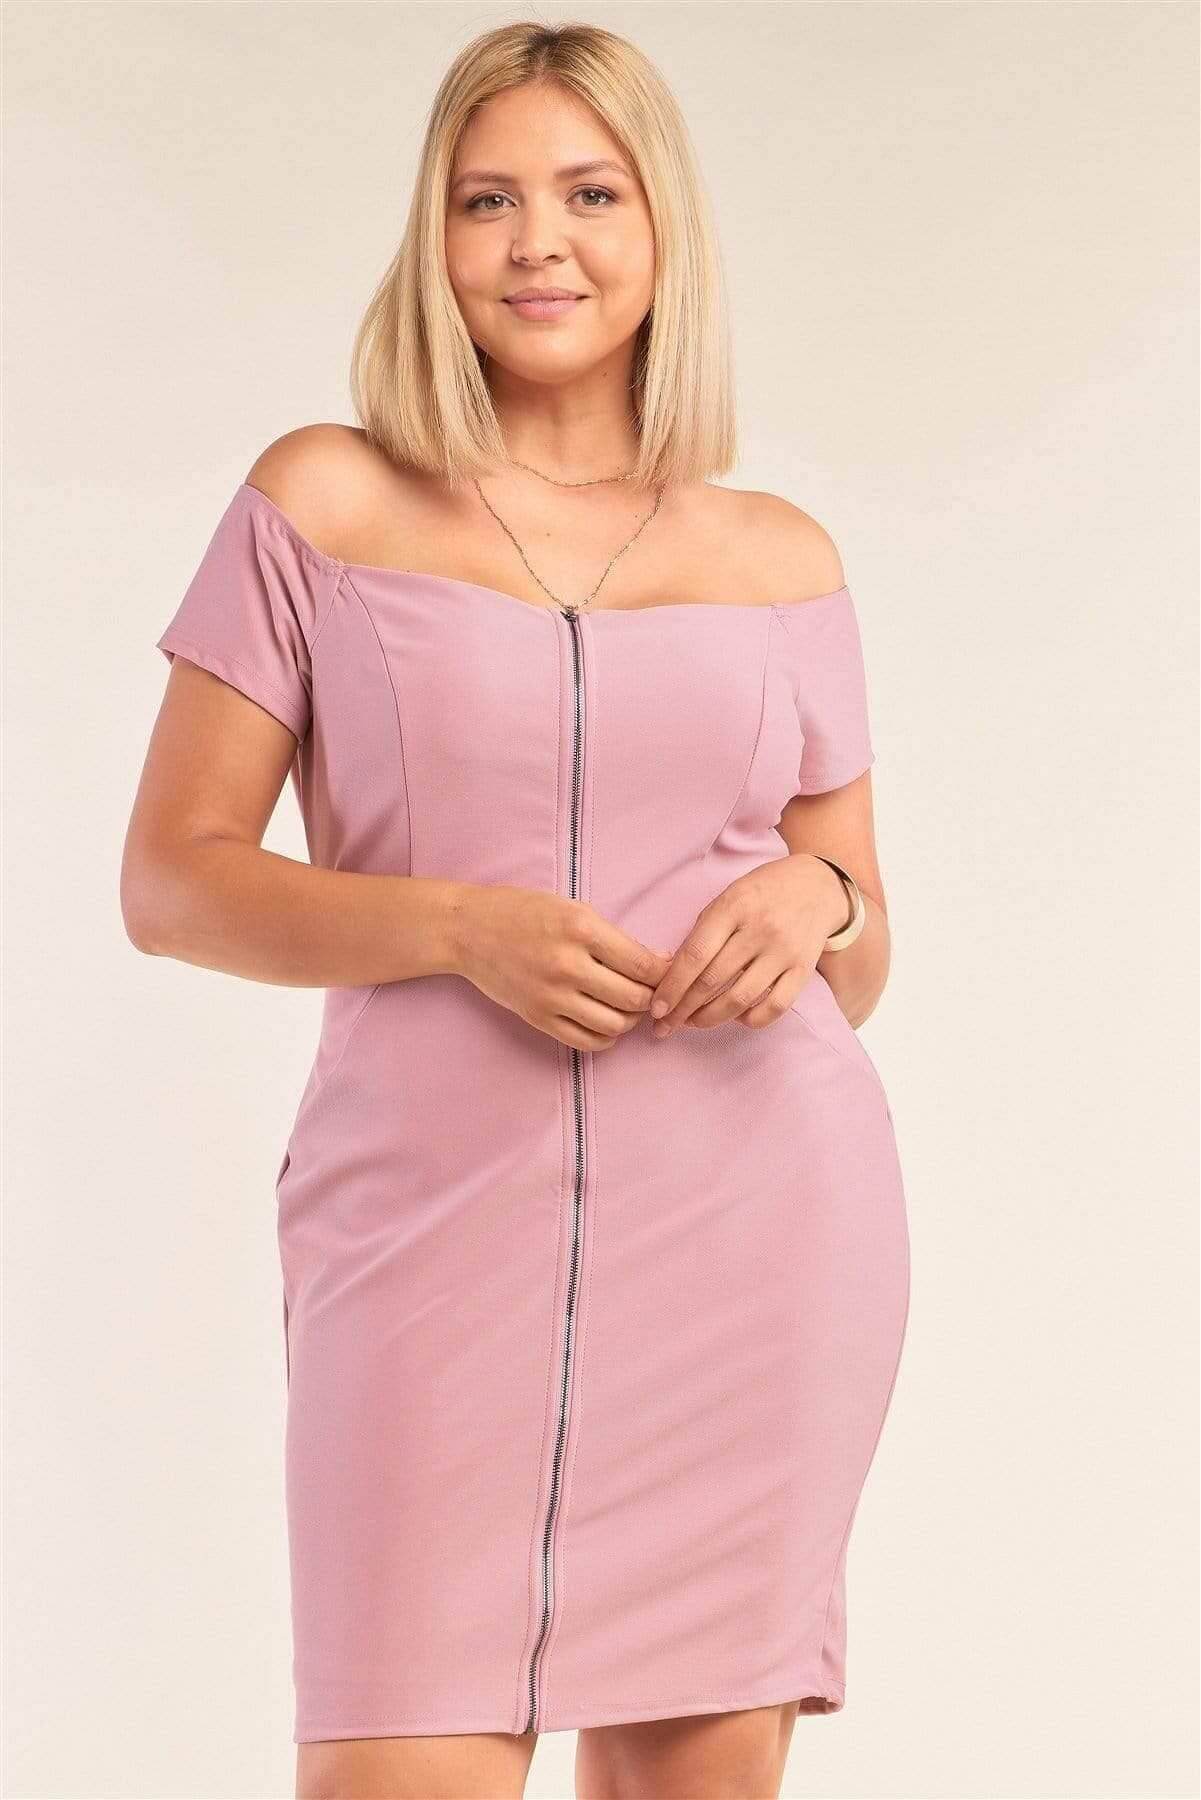 Blush Plus Size Off-the-shoulder Bodycon Mini Dress - Shopping Therapy, LLC Dress